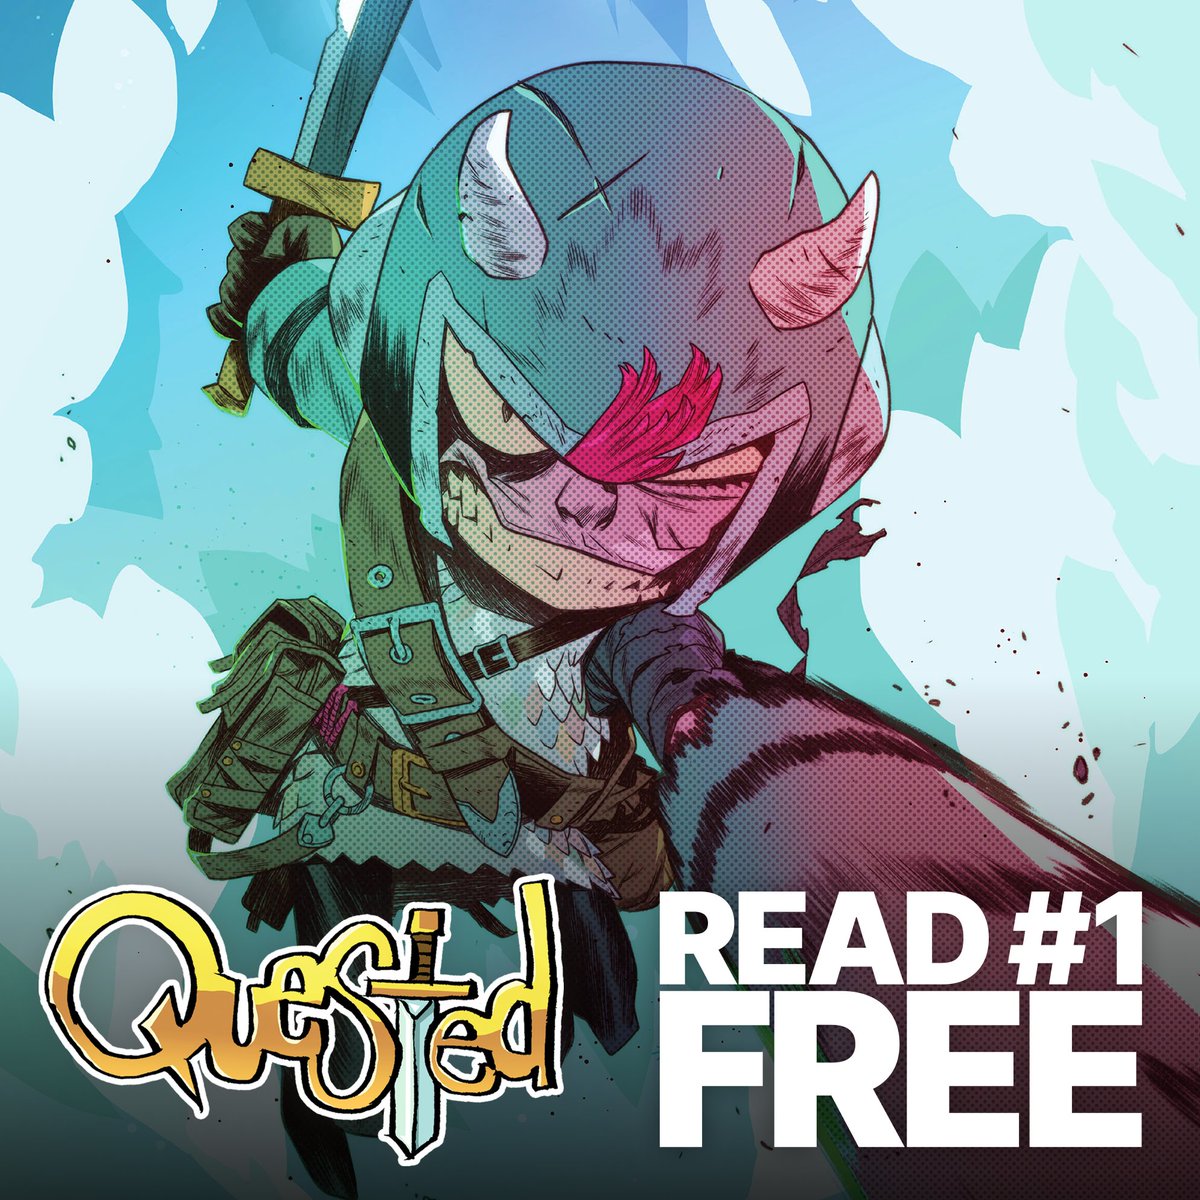 Read Quested #1 for FREE on Omnibus via @Massivepublish omnibus.app/shop/series/20…